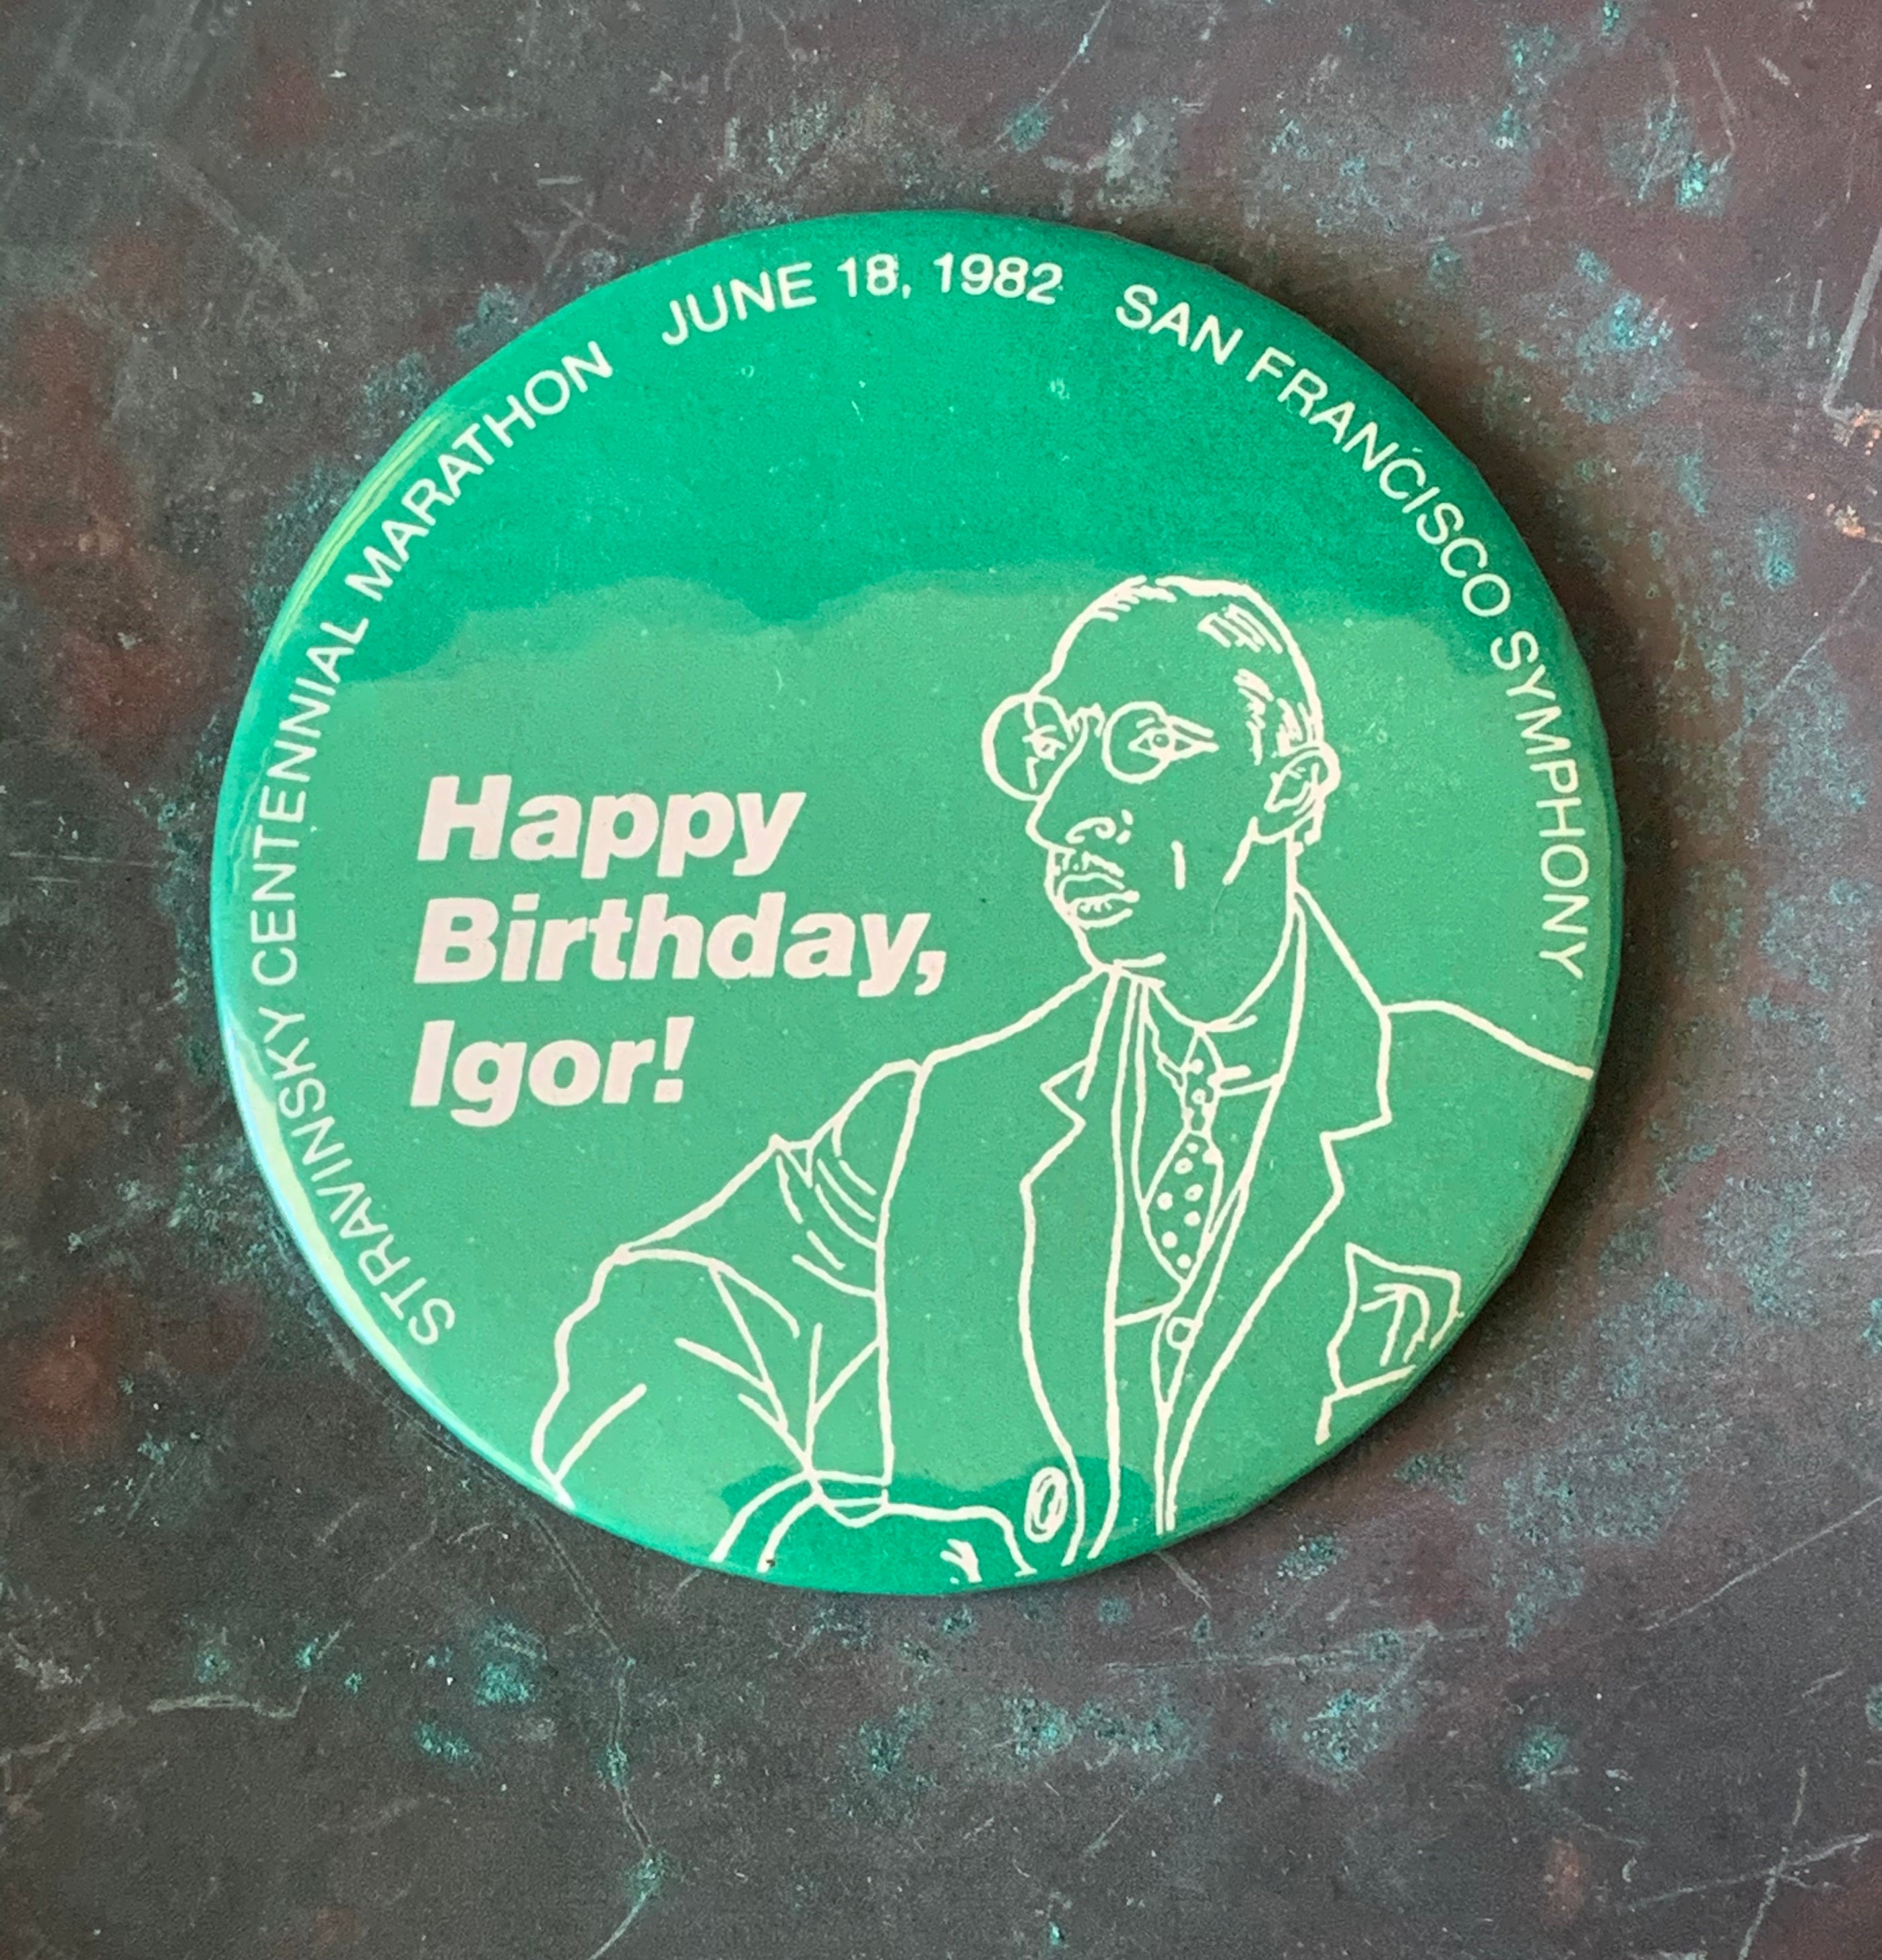 Happy Birthday Igor, San Francisco Symphony Vintage Pinback Button, Stravinsky Centennial Marathon, June 18, 1982 Pianist Composer